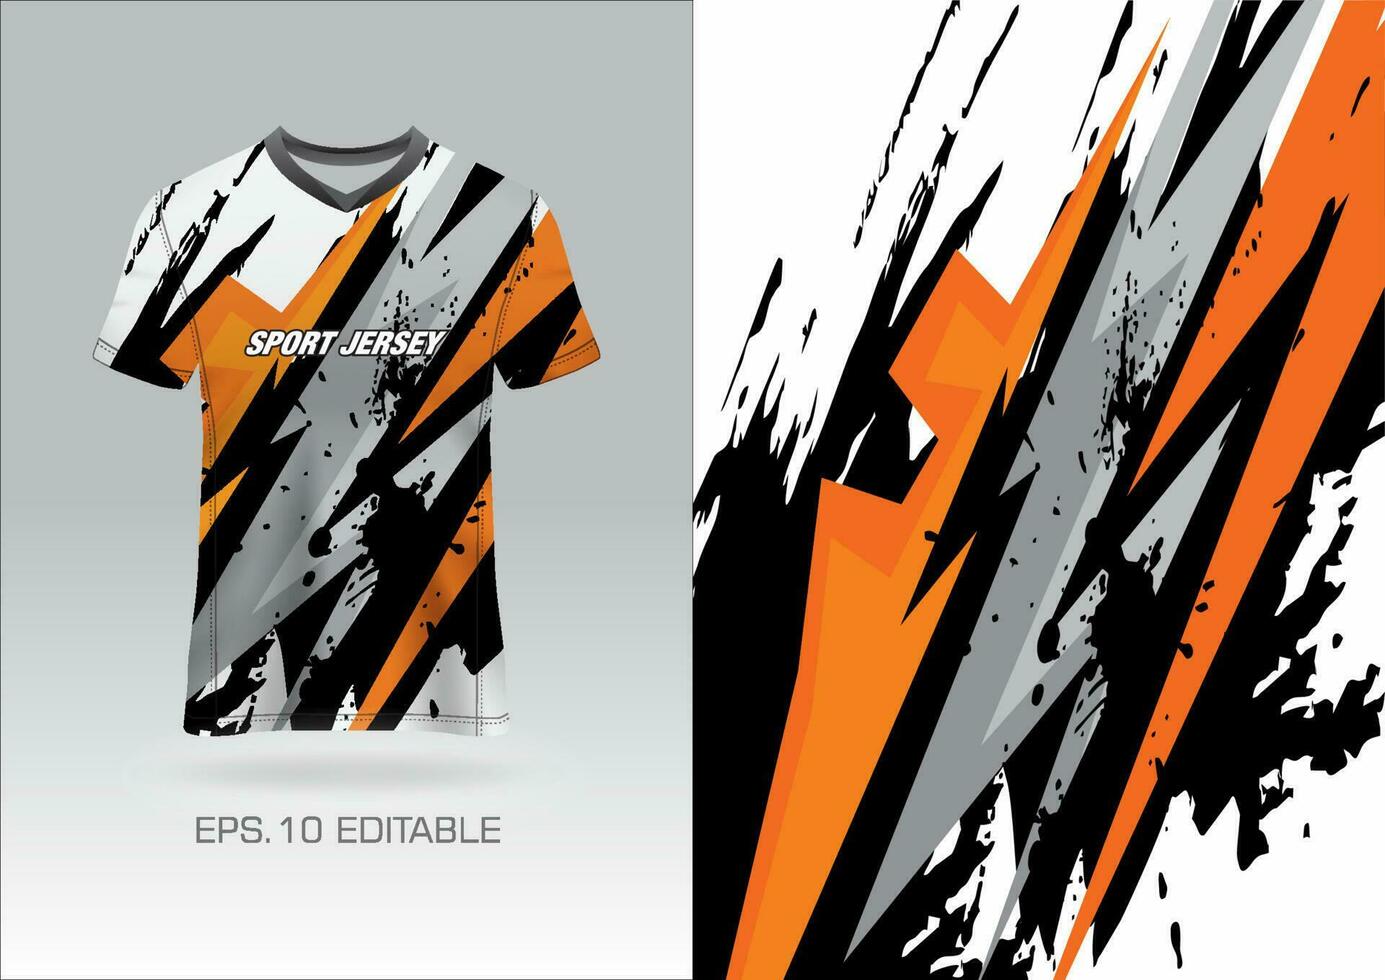 tshirt sports abstrac texture footbal design for racing soccer gaming motocross gaming vector